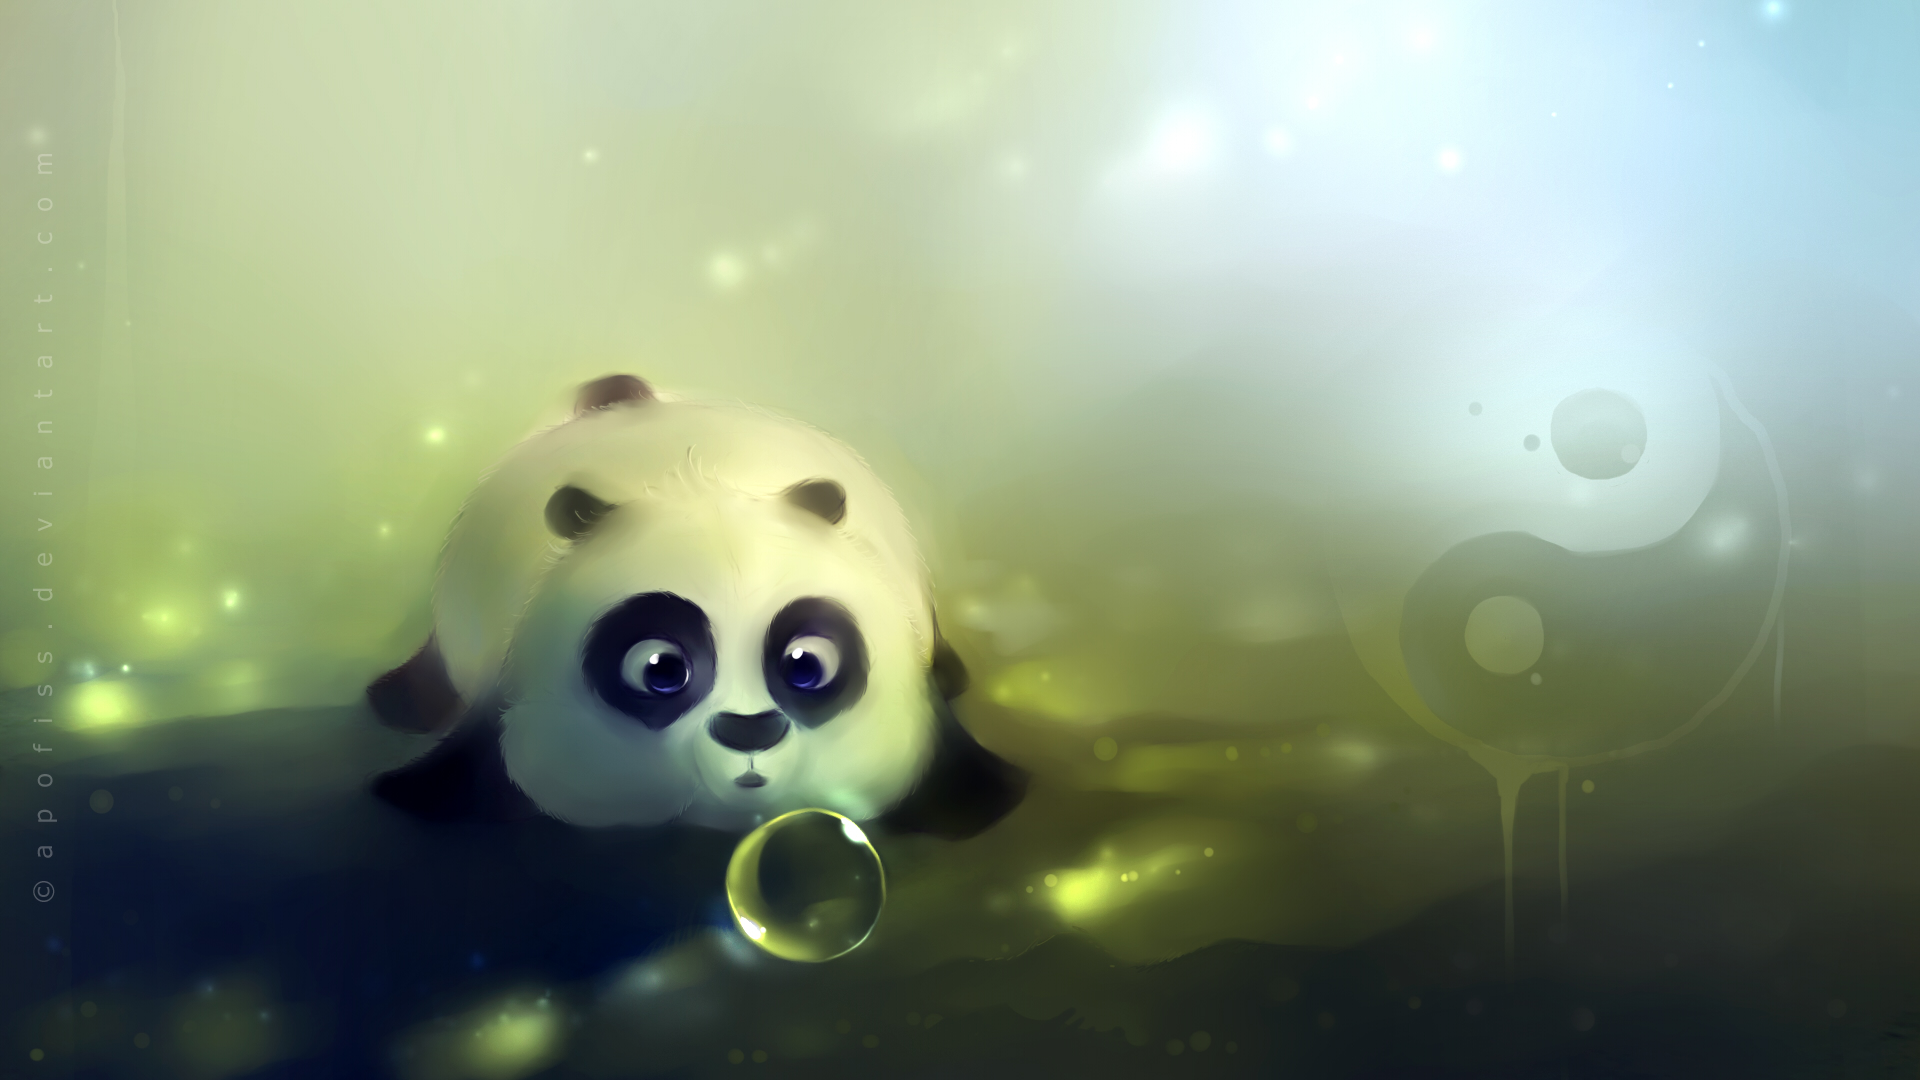 Cute Panda Wallpapers